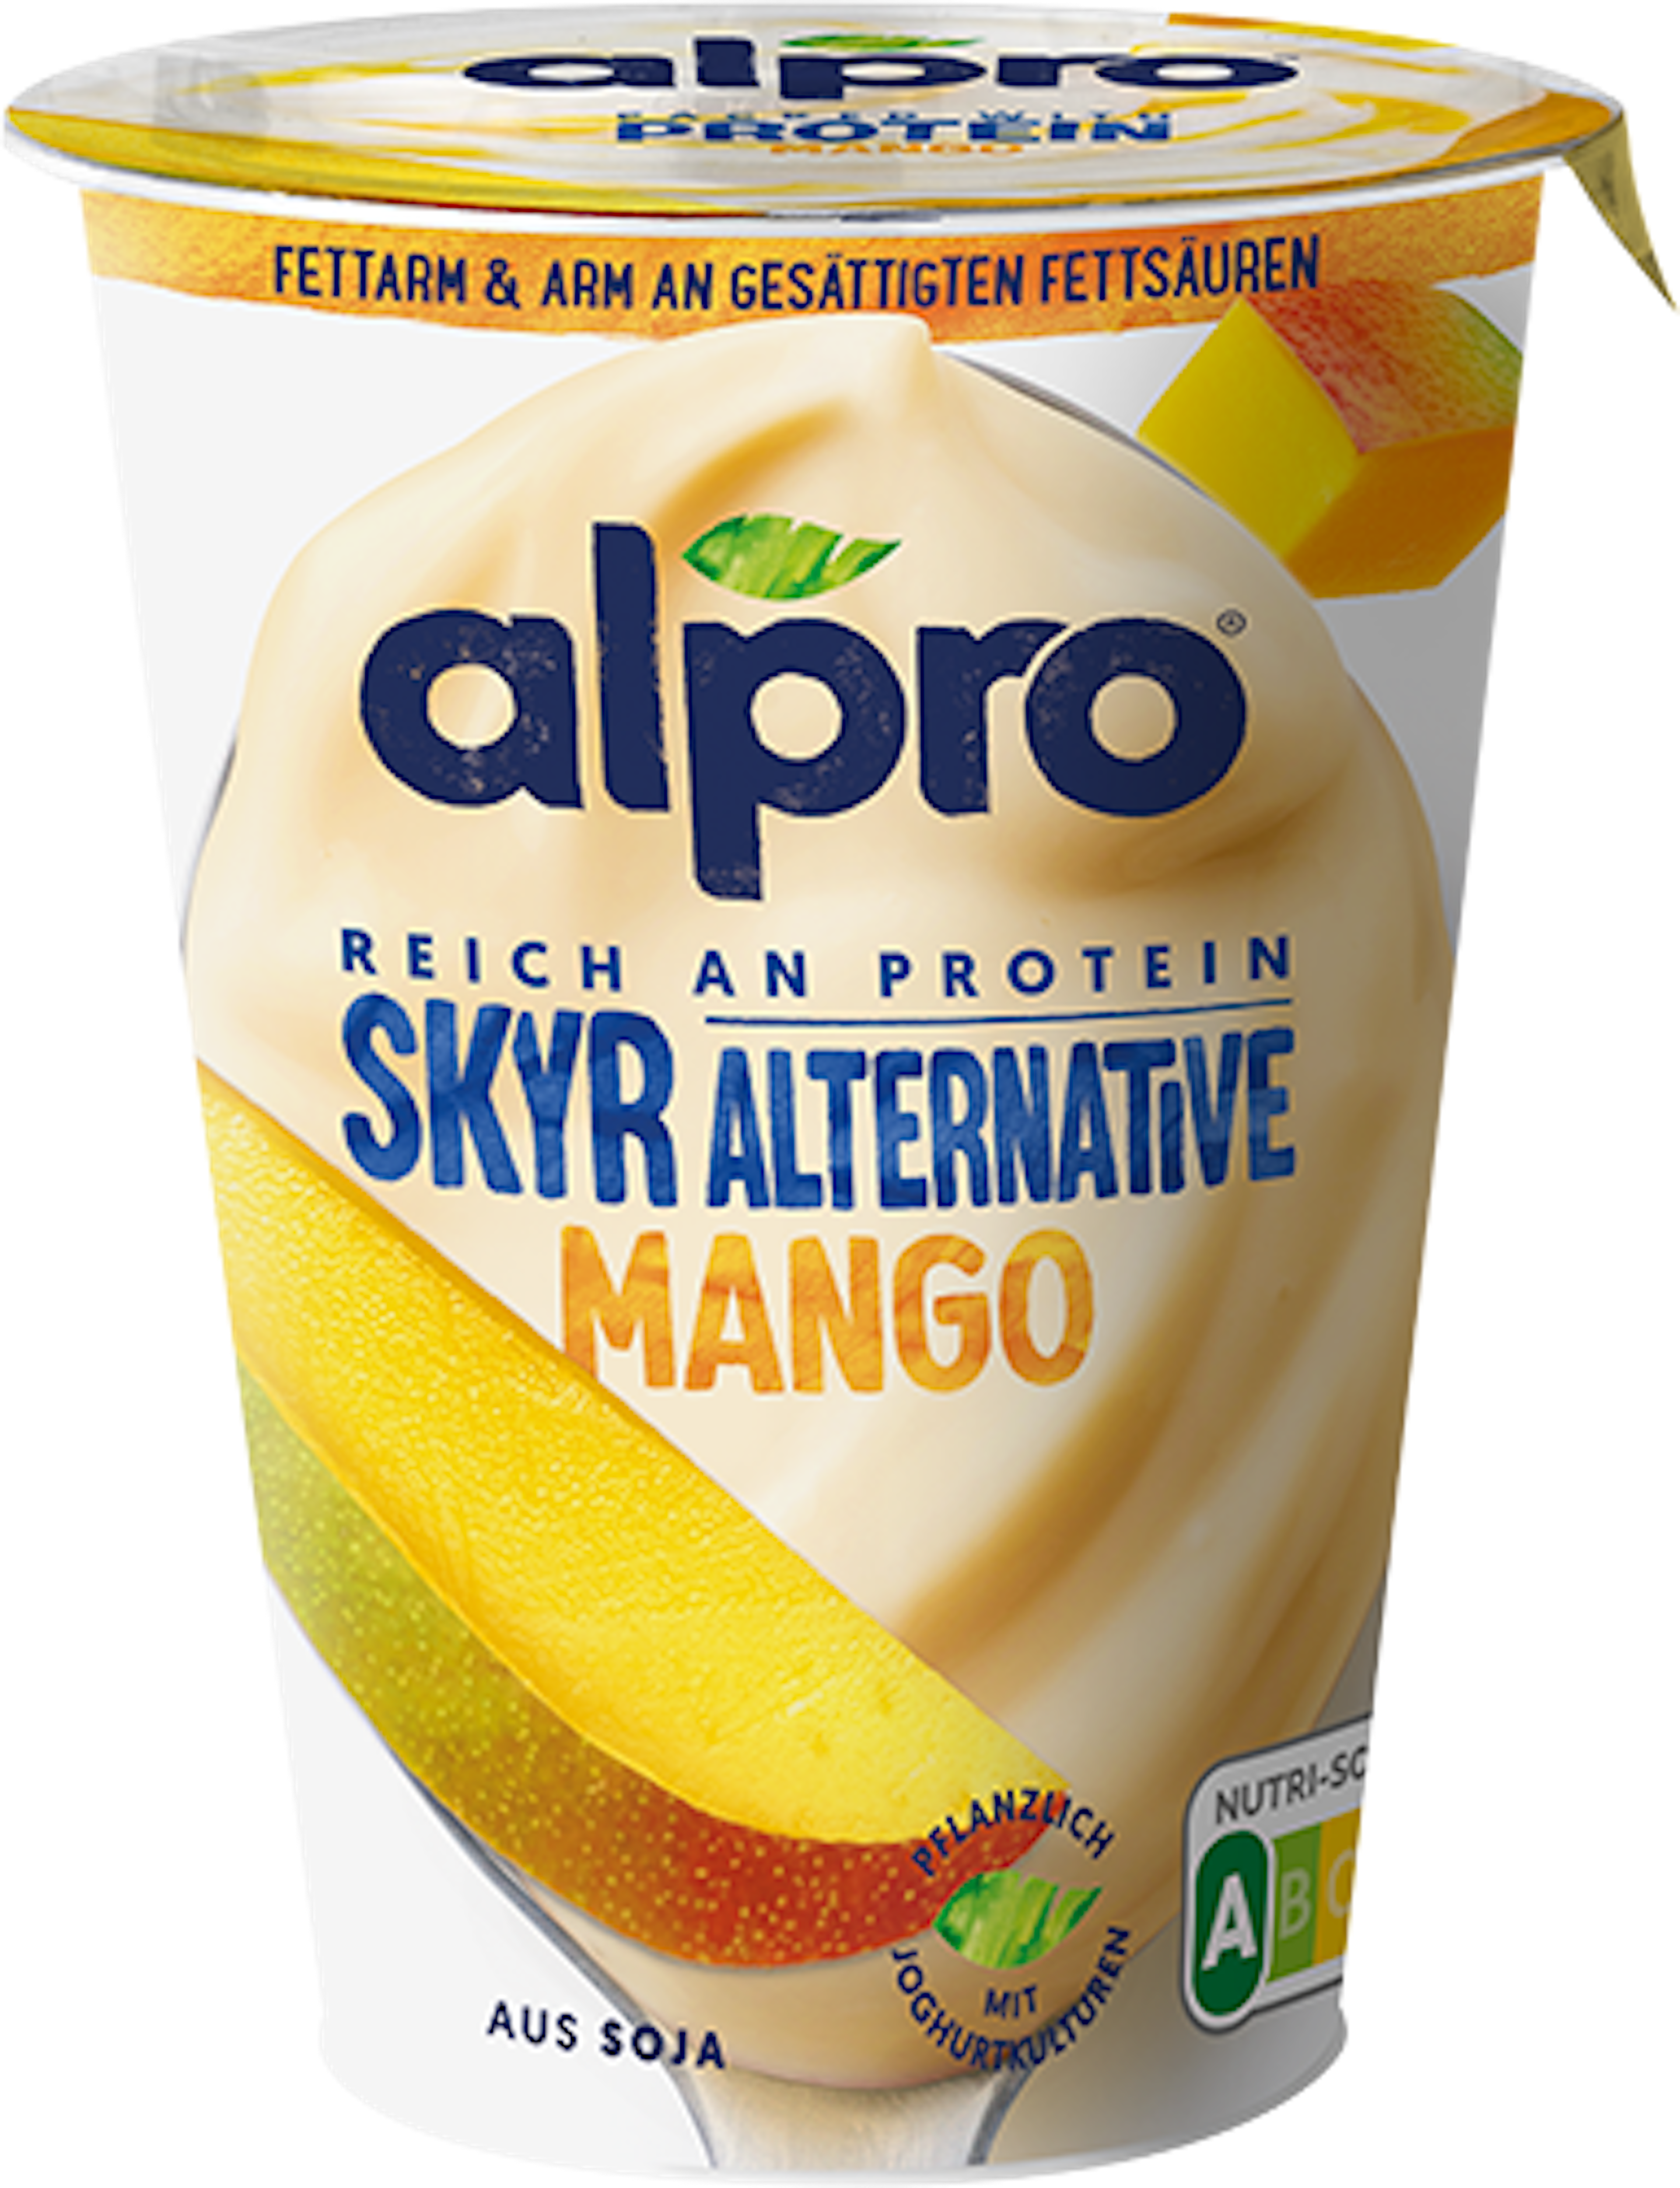 Skyr Alternative Mango